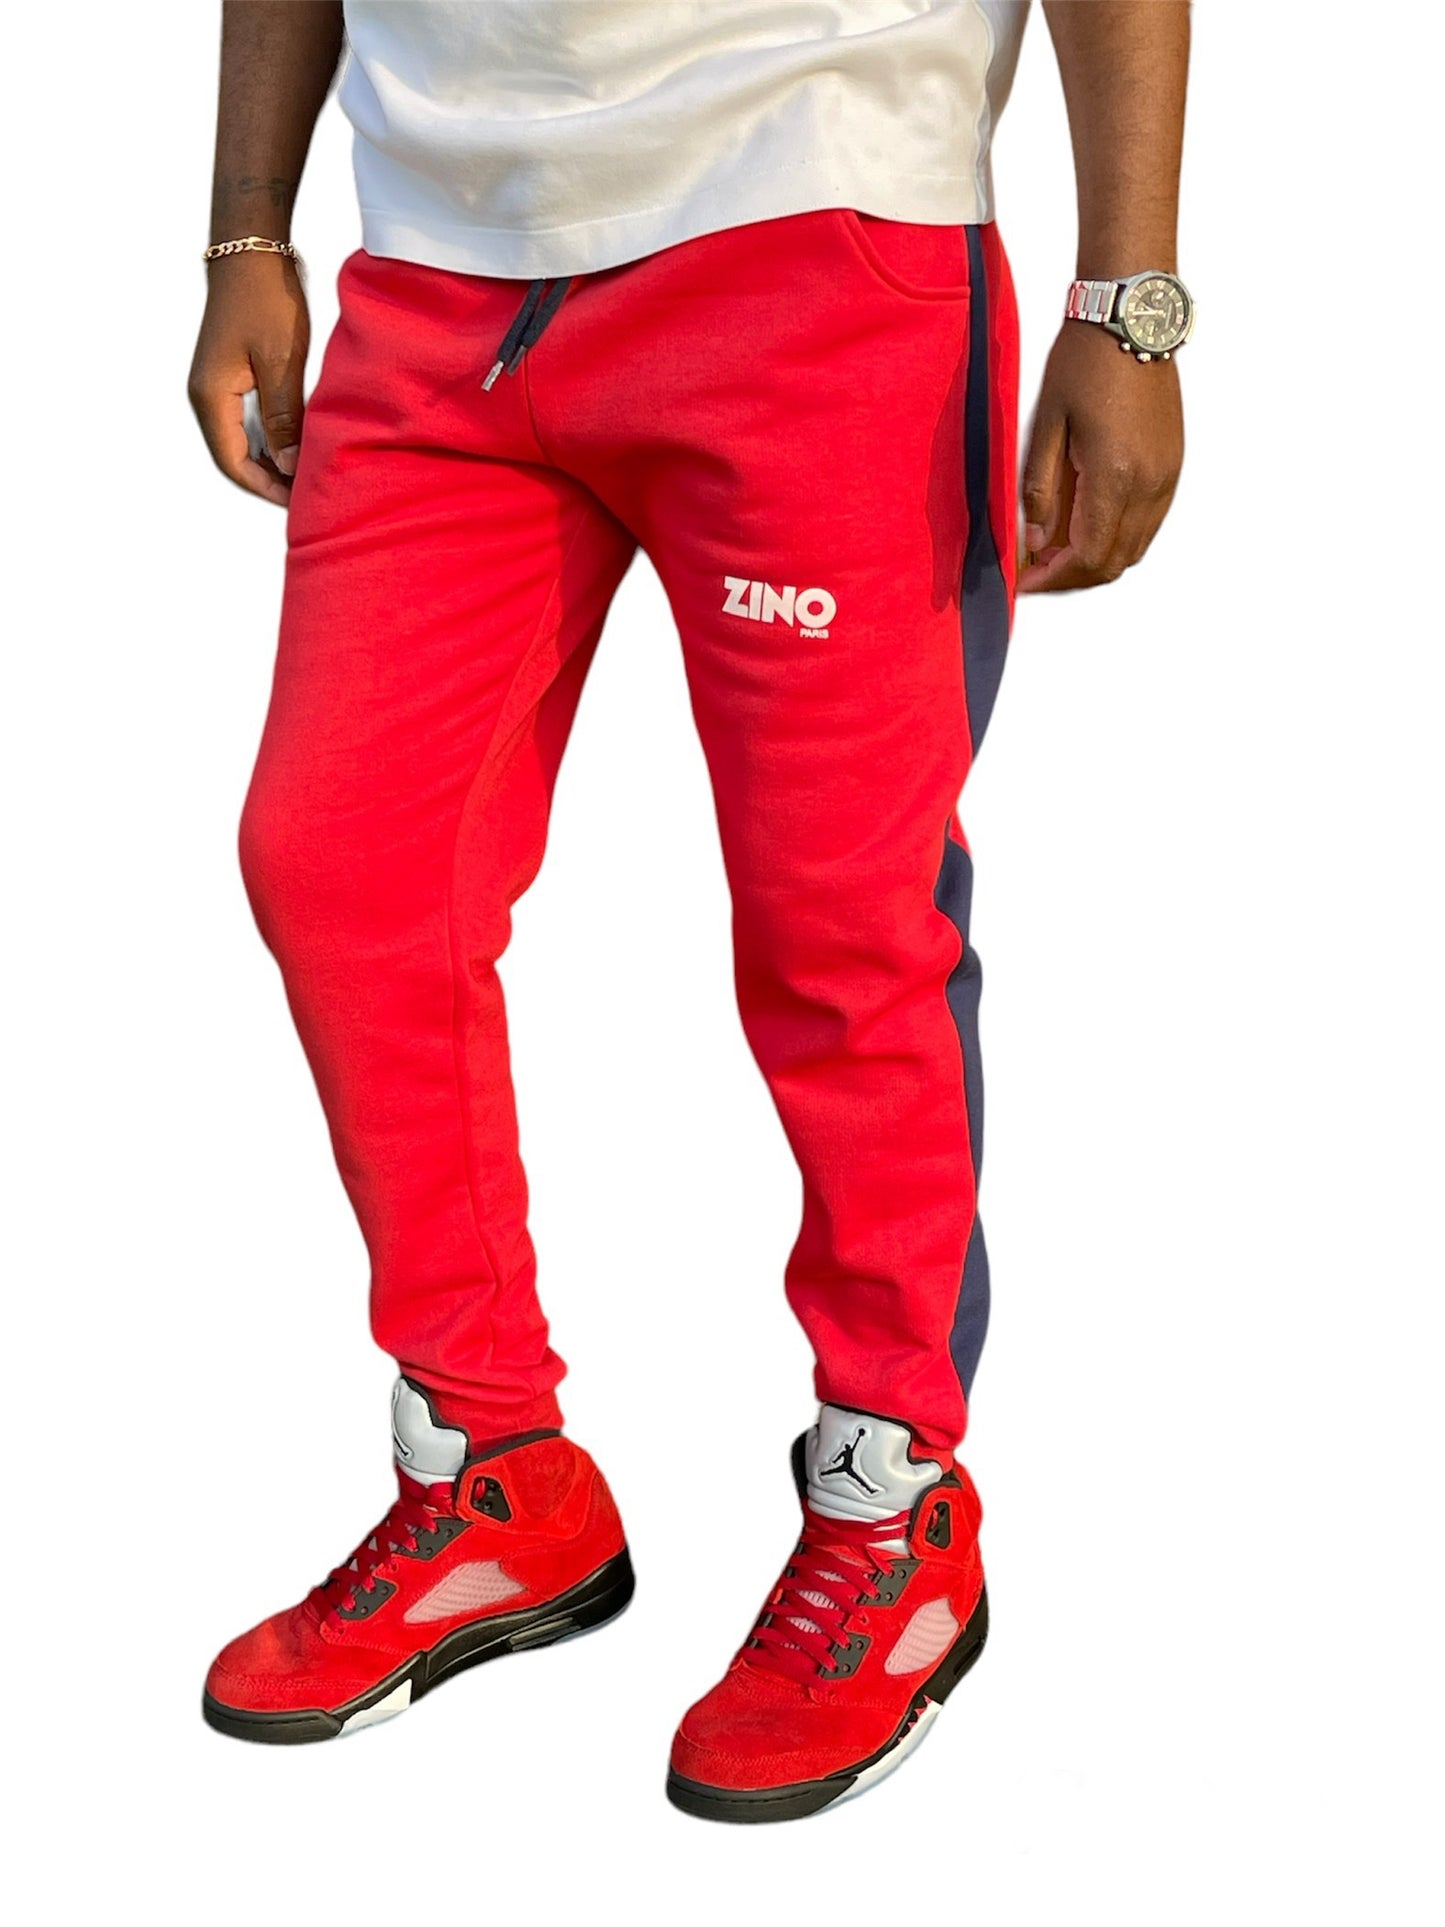 Pantalon Jogging rouge Unisexe basique 100% coton confort absolu garanti.